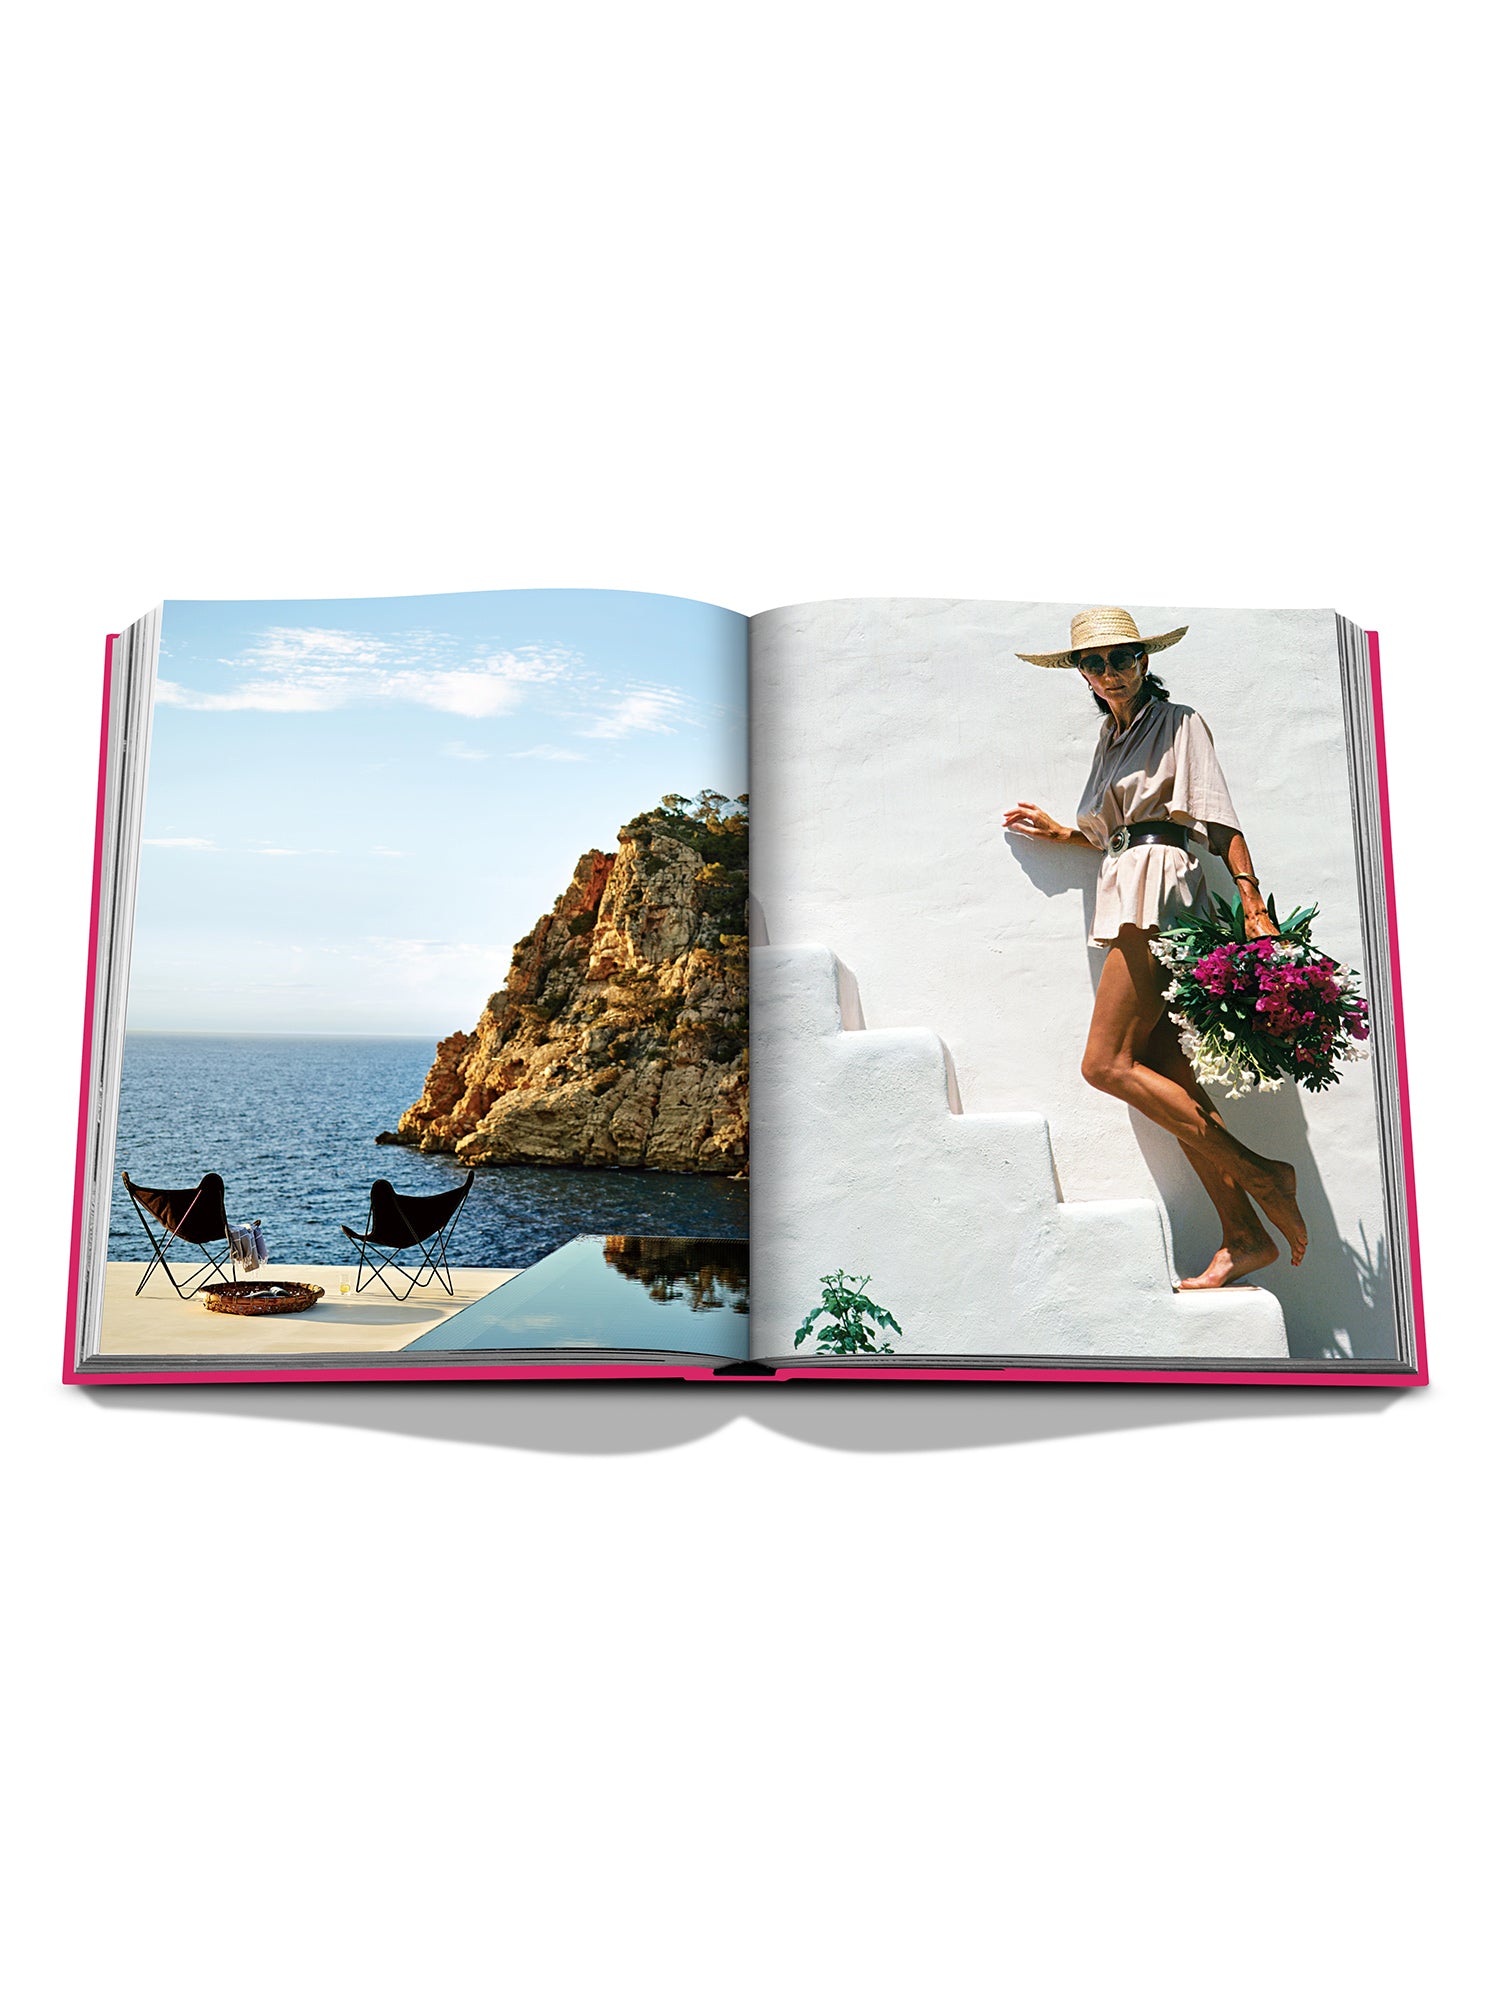 Ibiza Bohemia [Book]